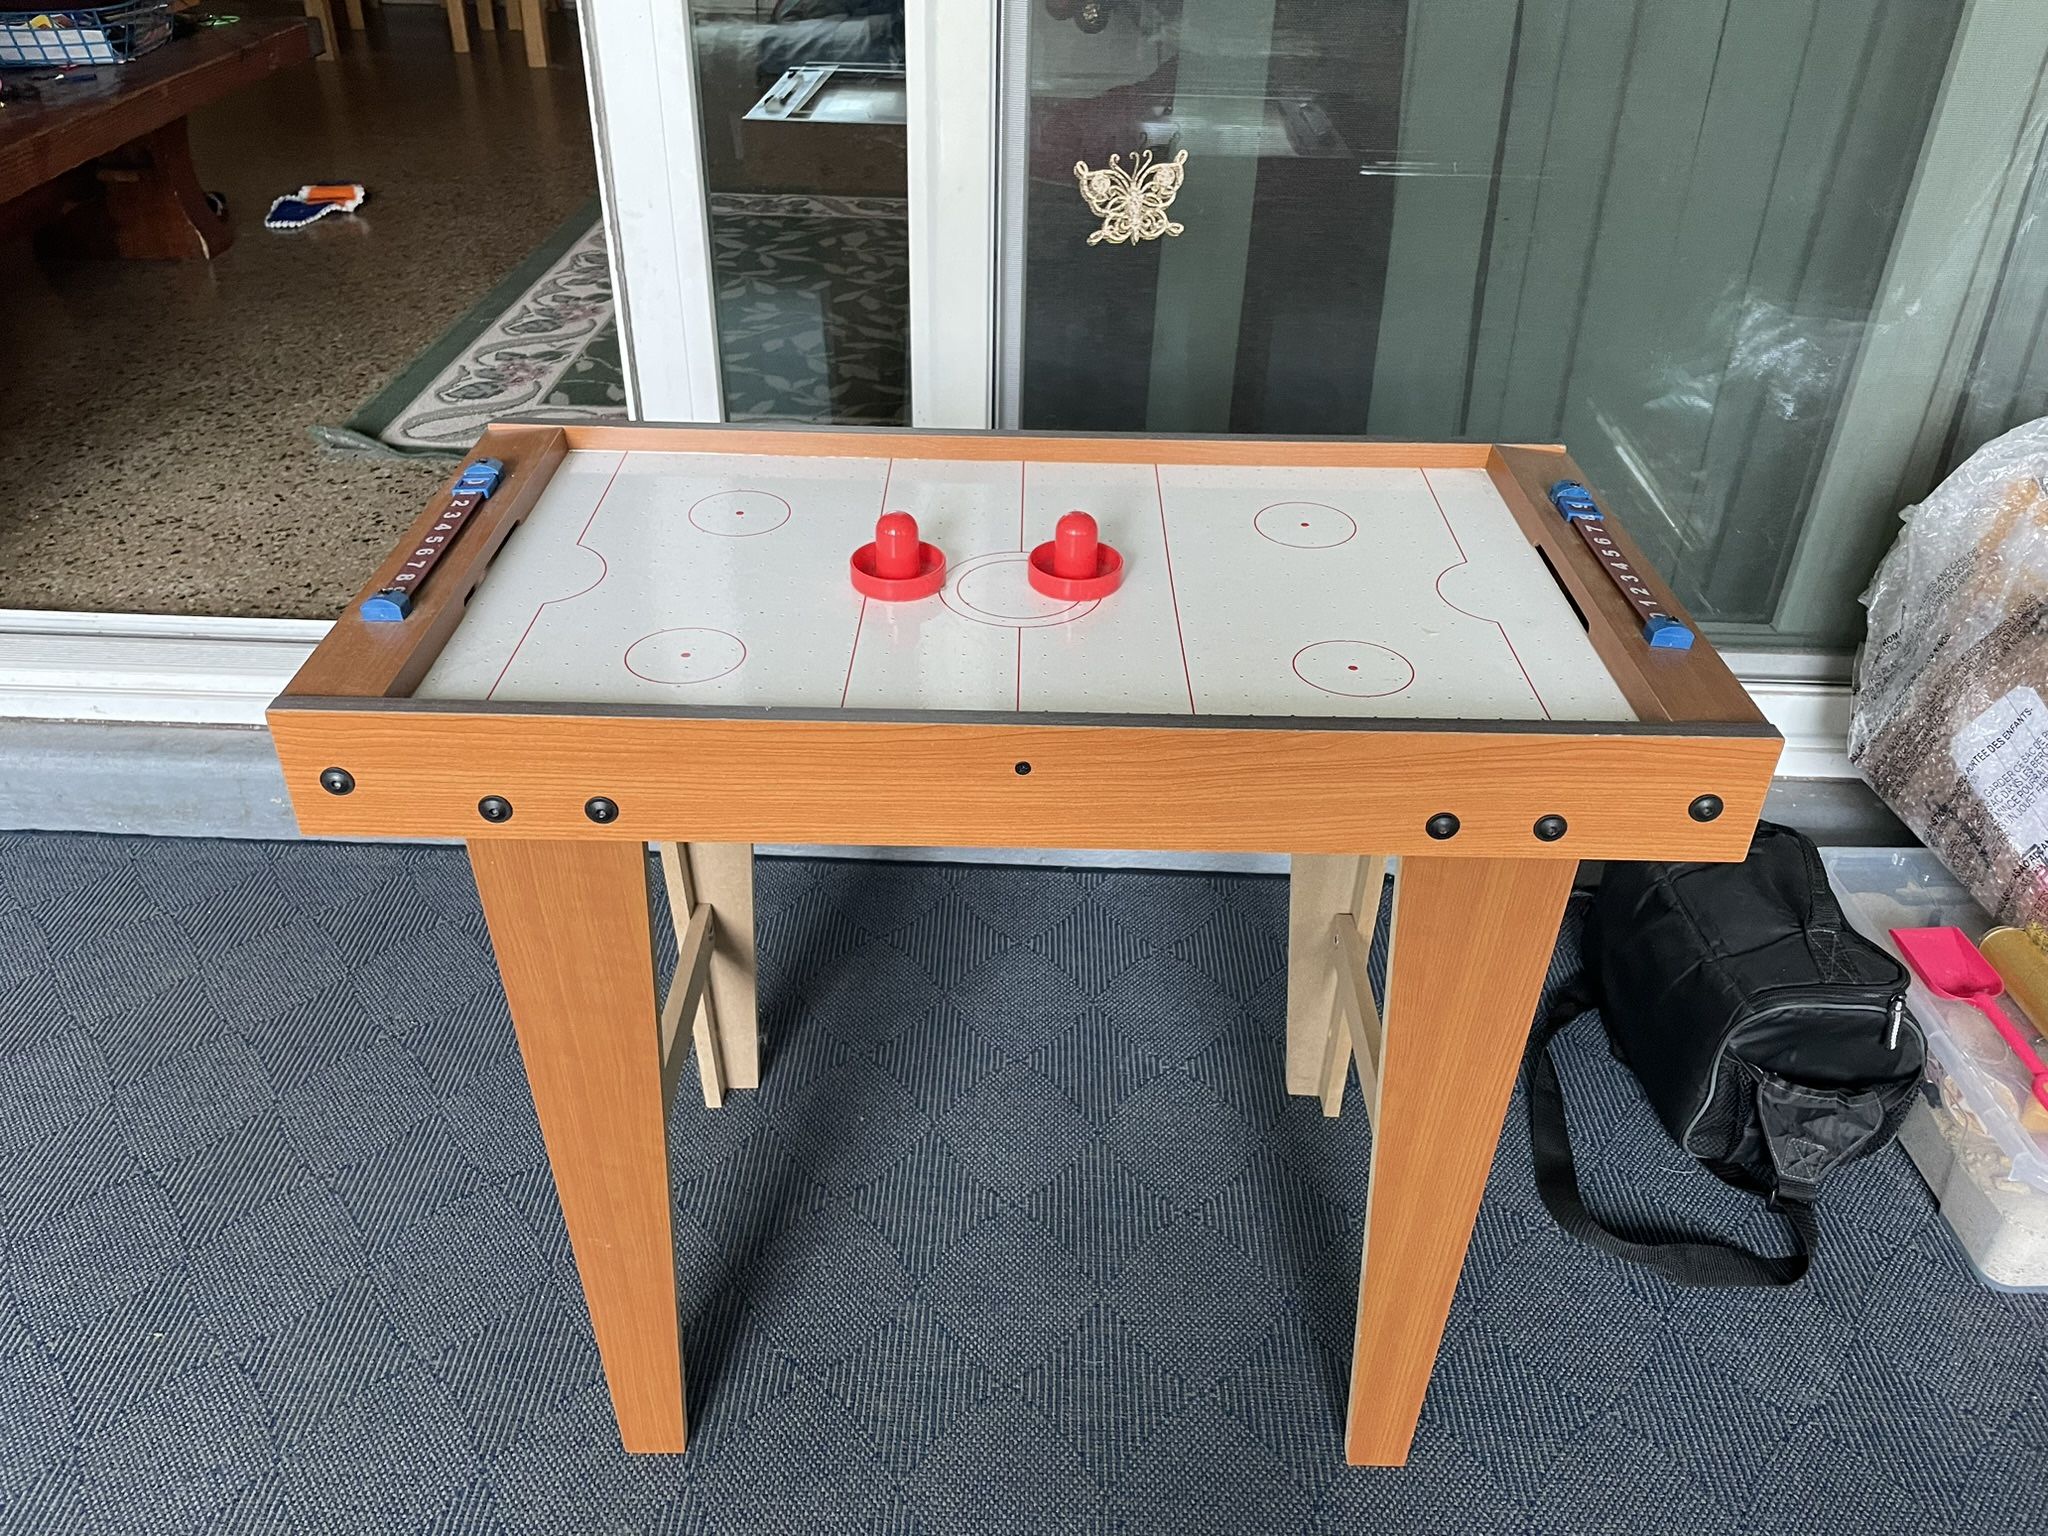 Air Hockey Mini Table